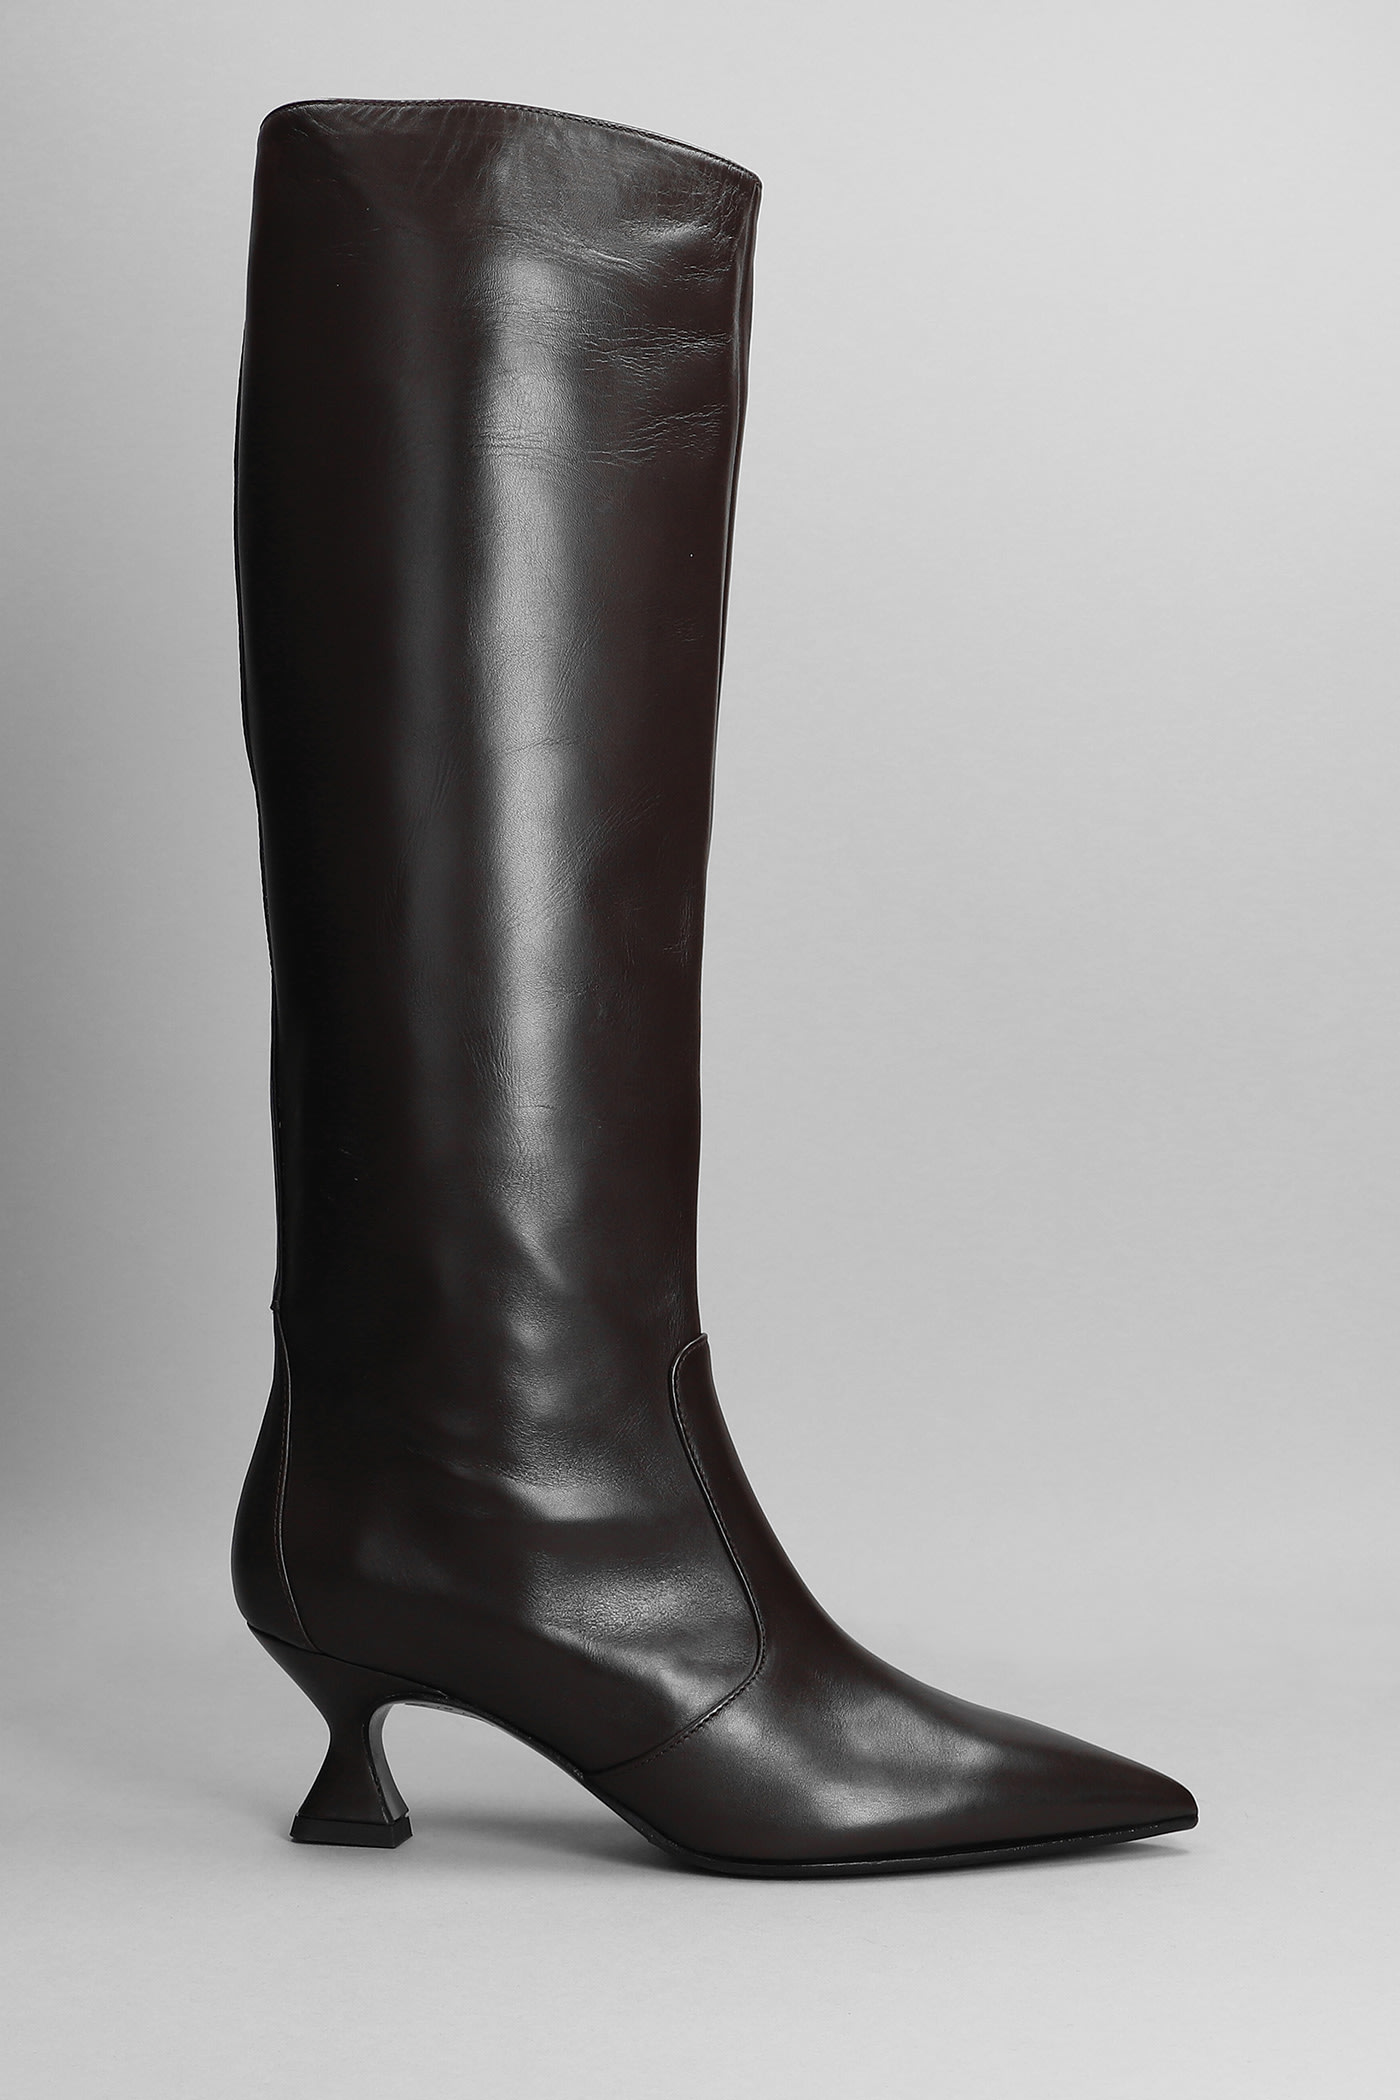 Fabio Rusconi High Heels Boots In Dark Brown Leather